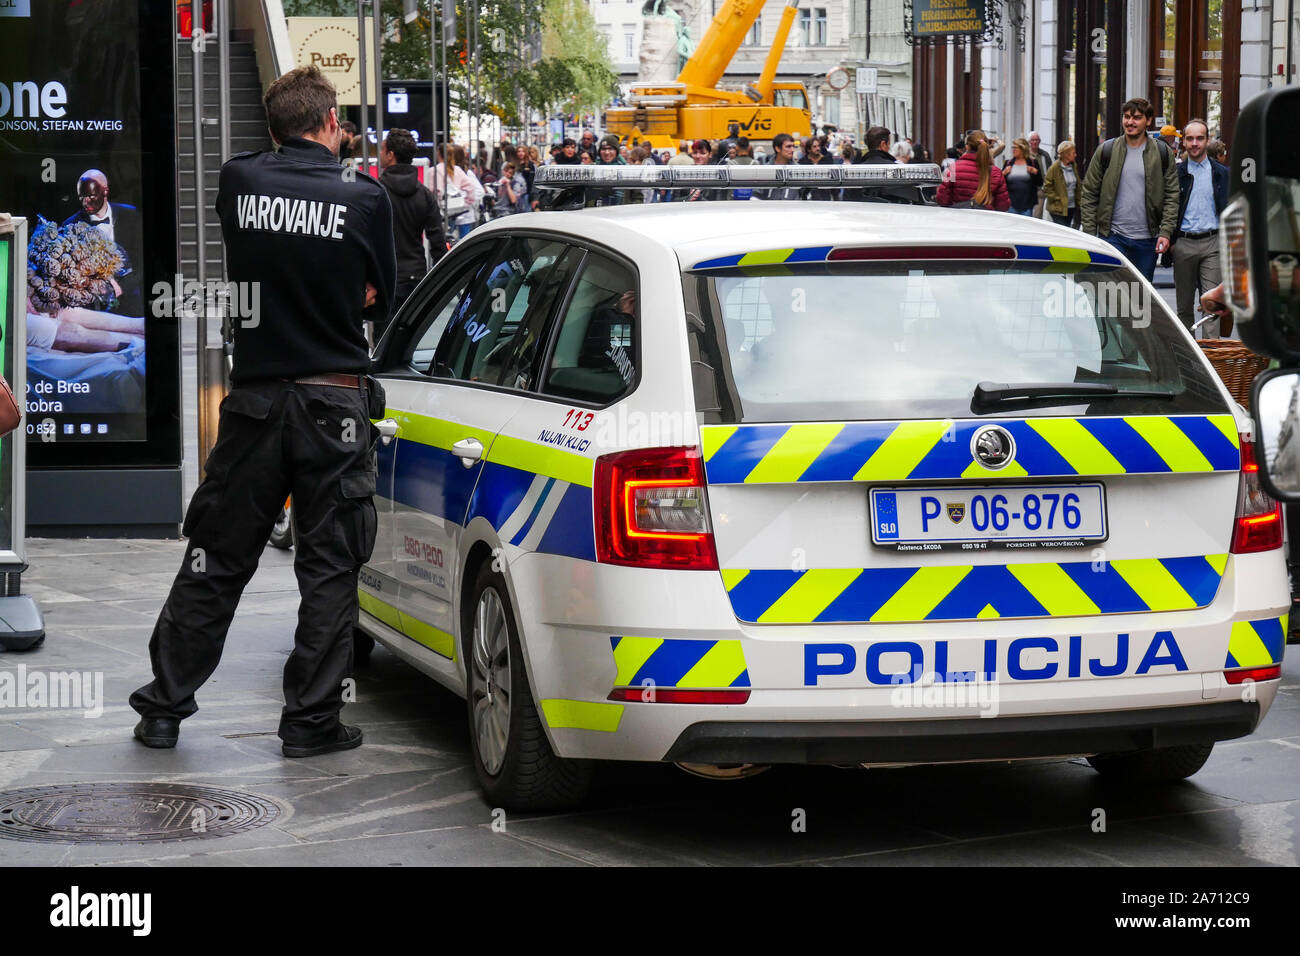 Police intervention, Ljubljana, Slovenia Stock Photo - Alamy